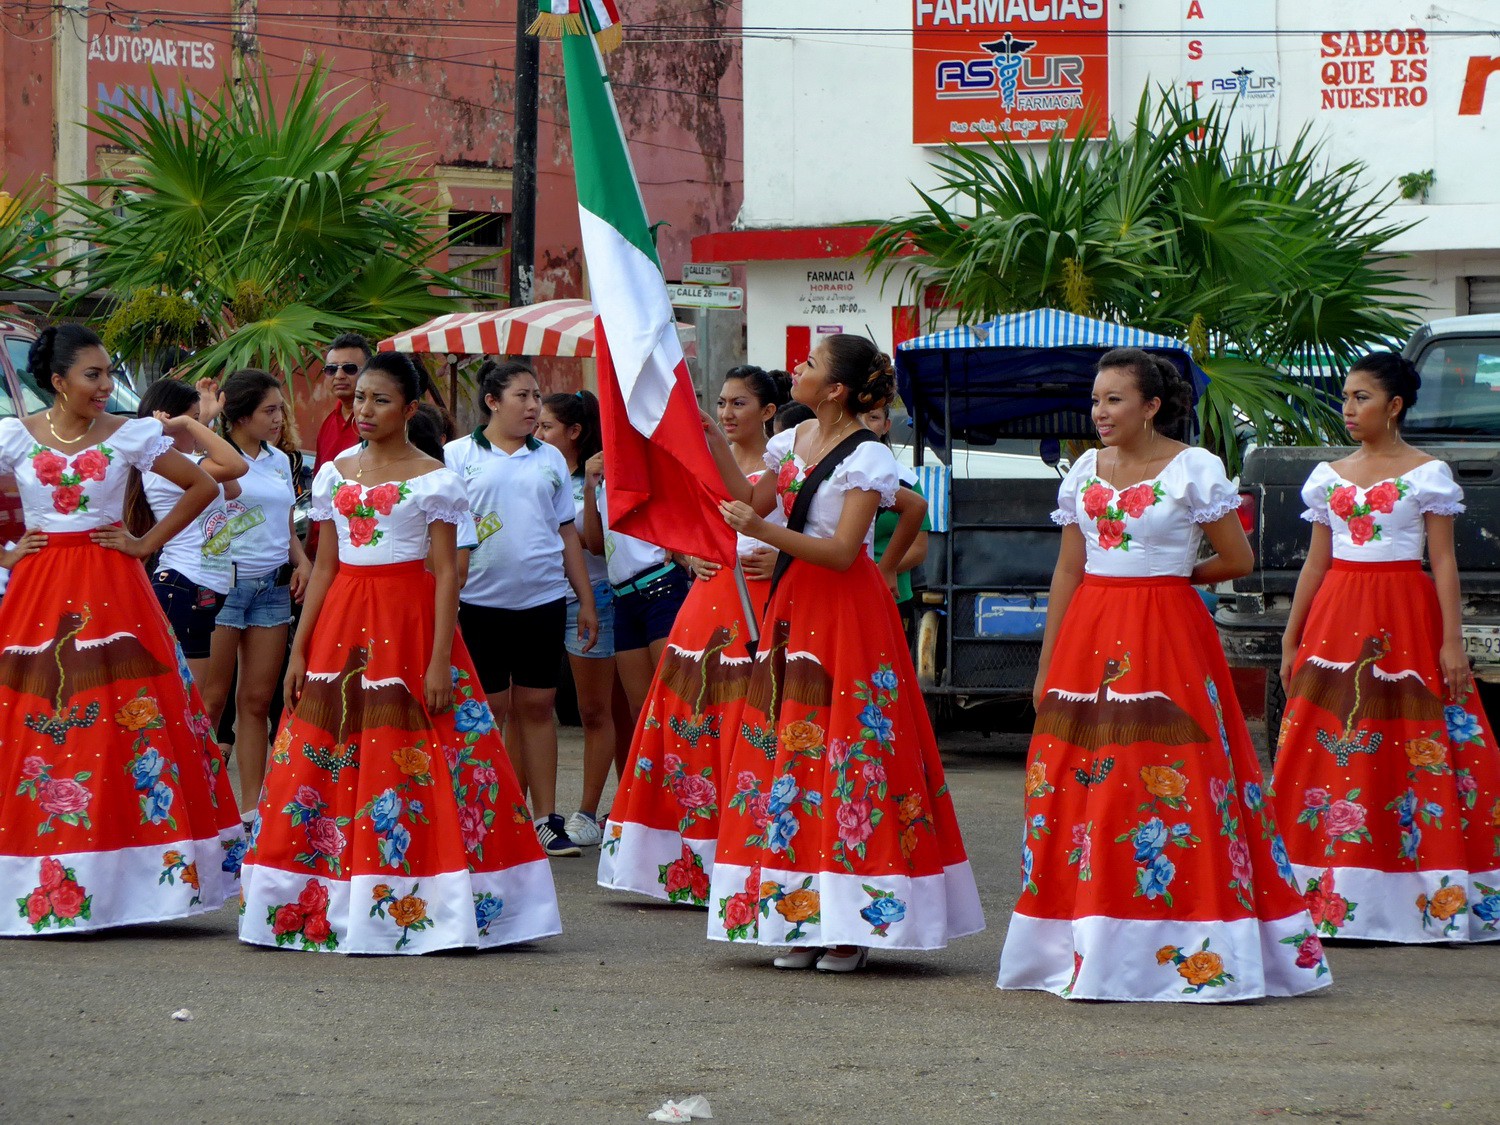 Fiesta in Muna de Arana - Day of the Revolution (November 20th)